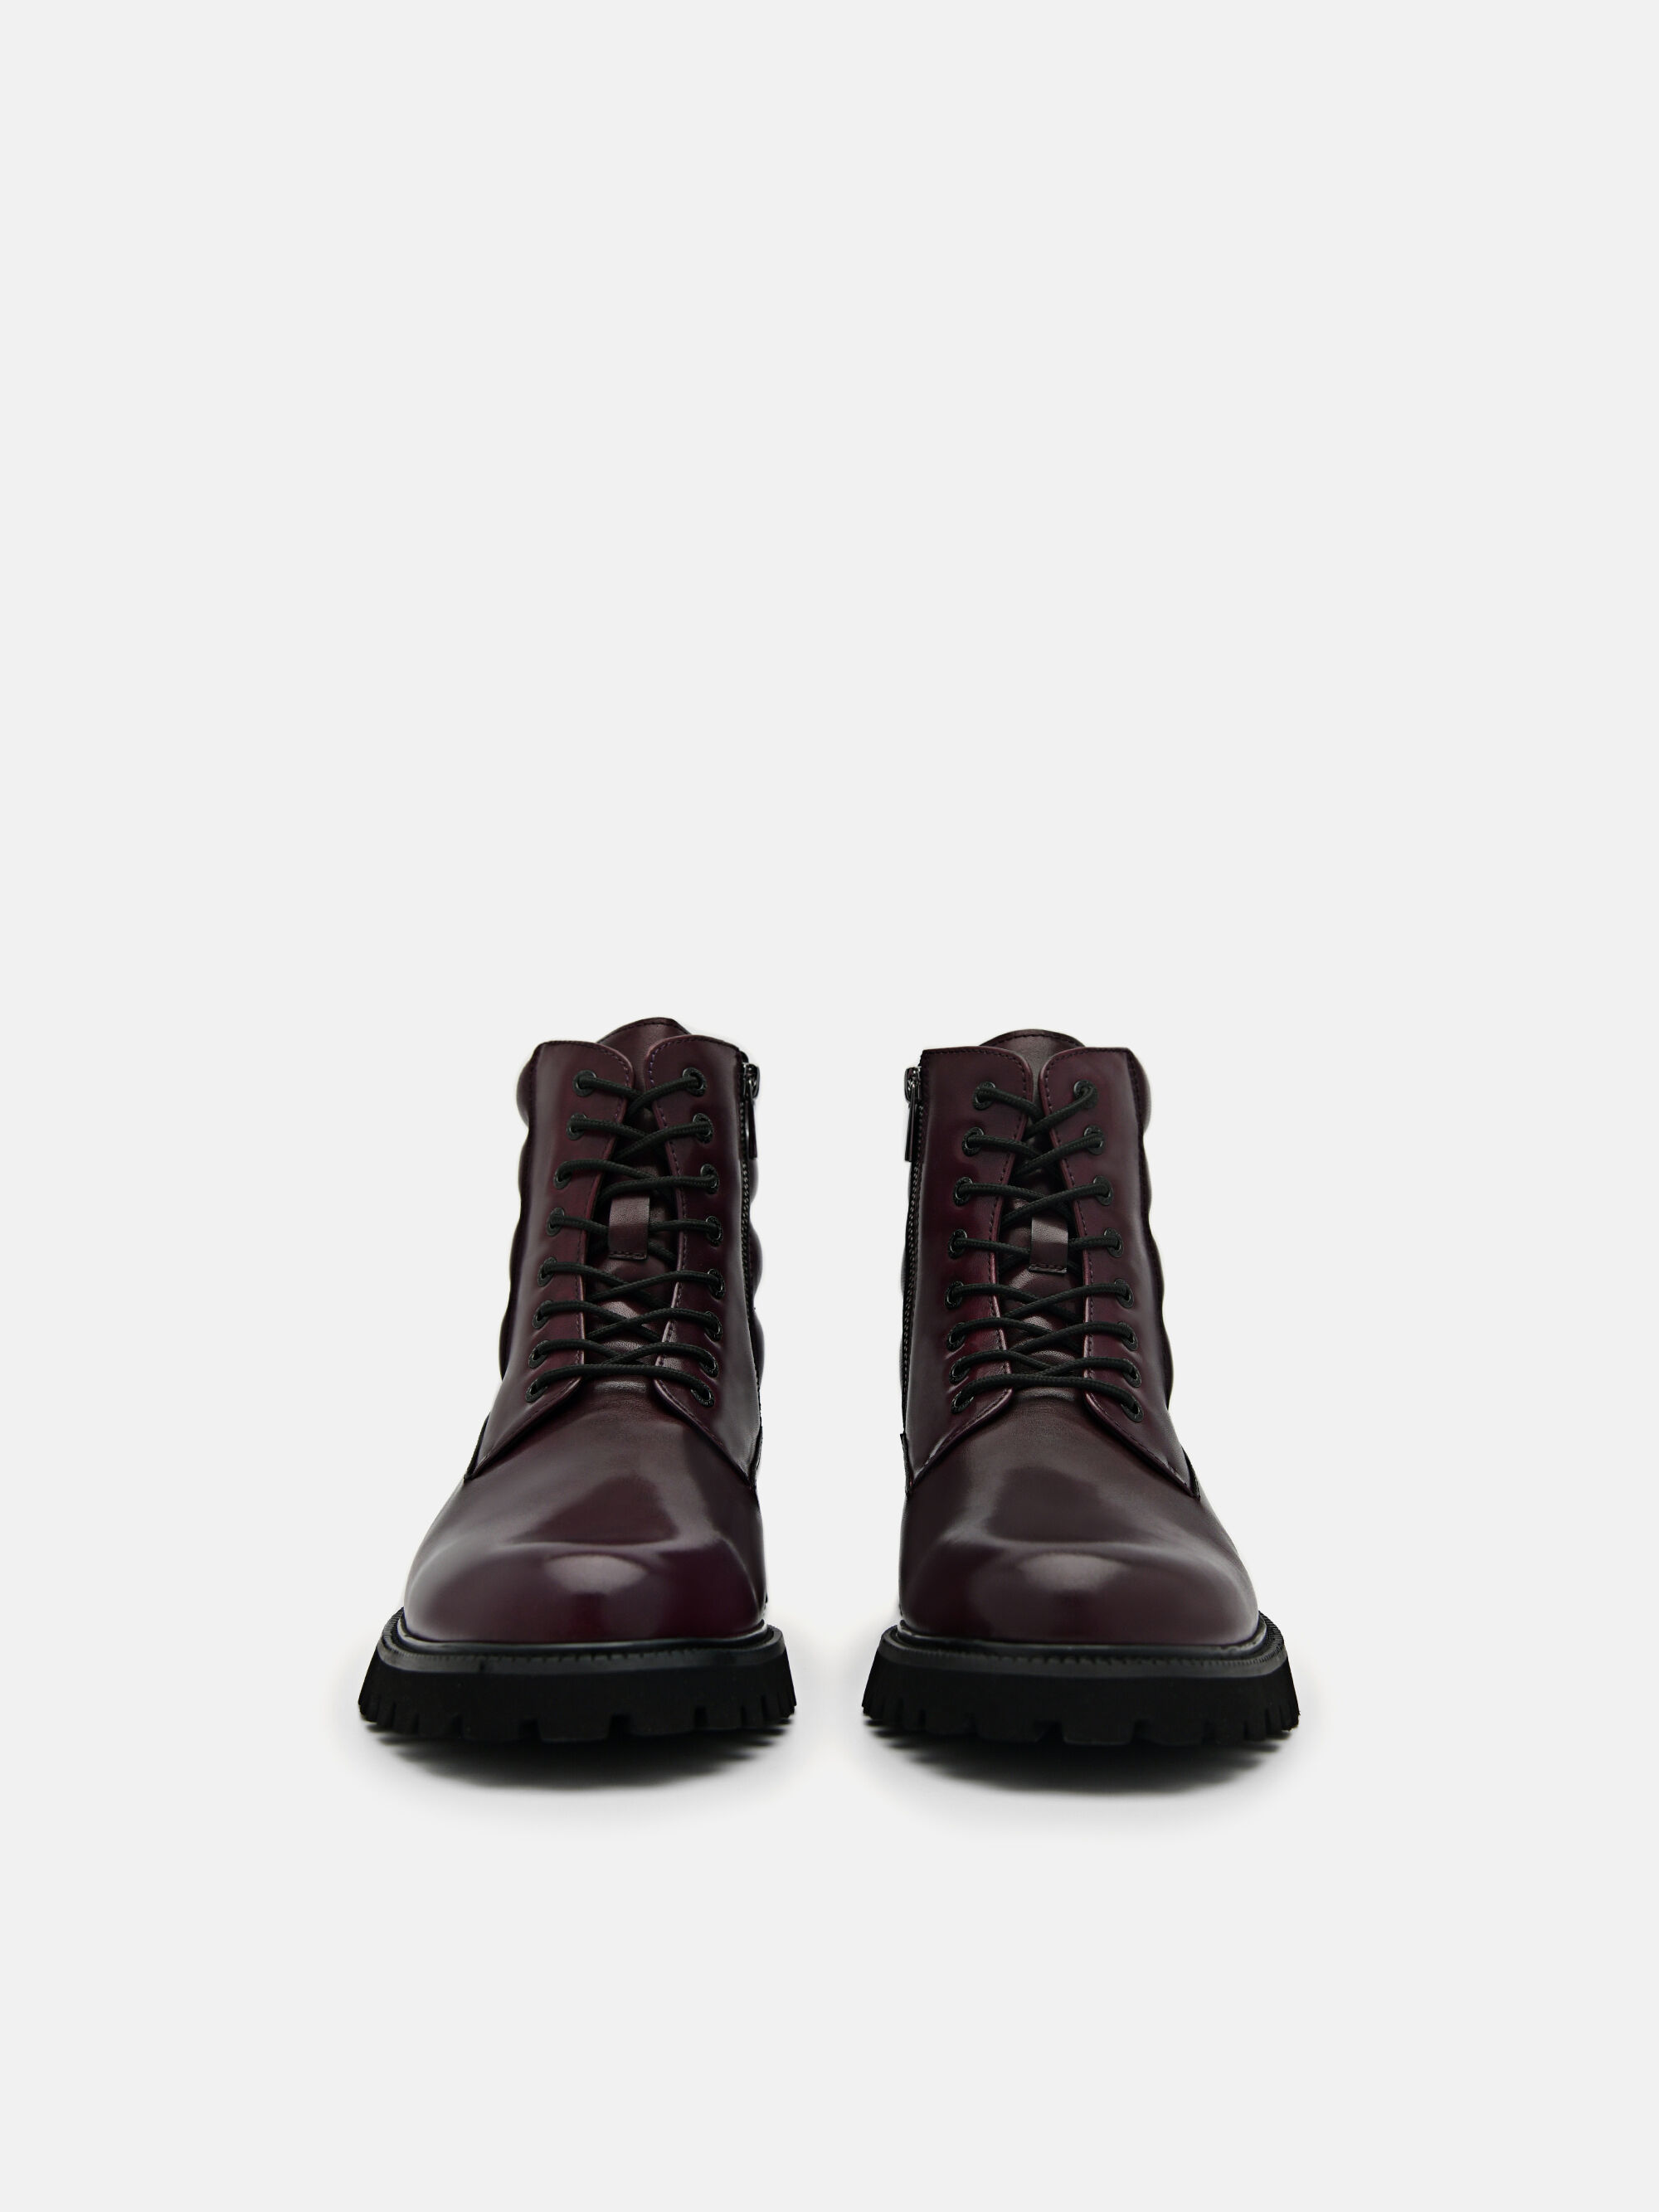 Jay Leather Boots, Dark Purple